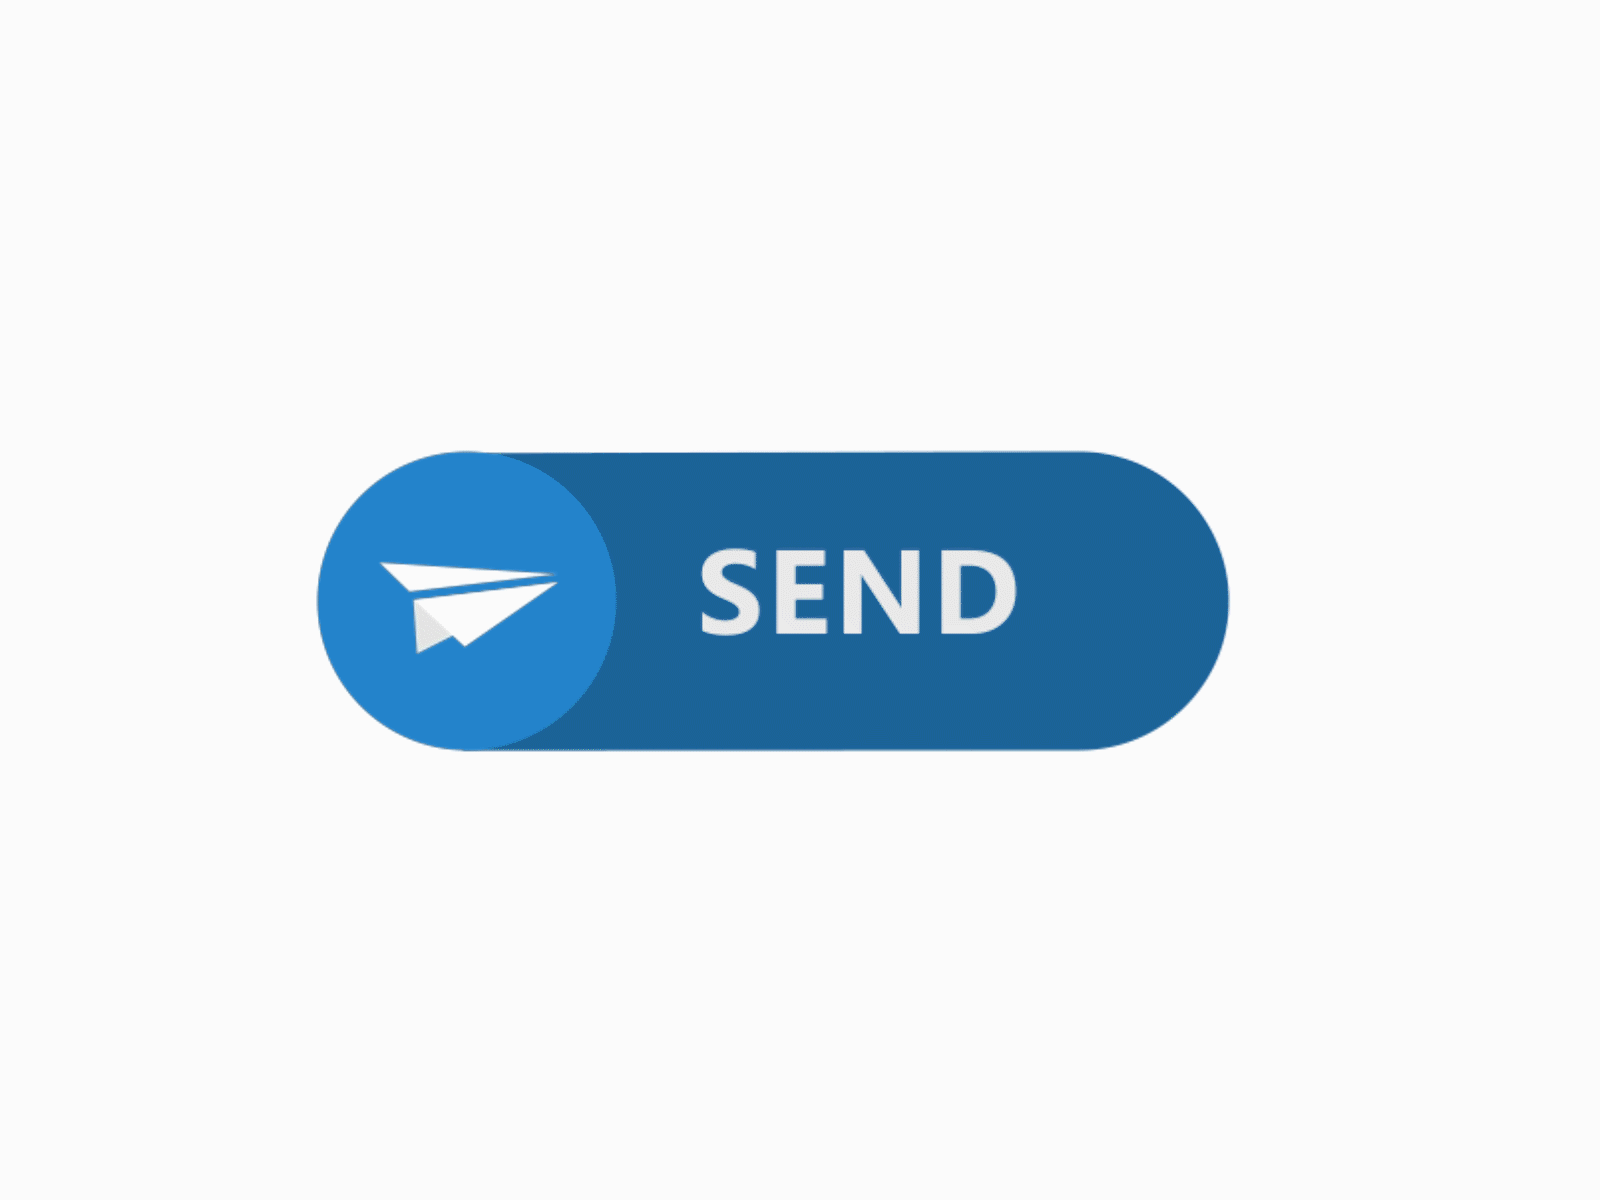 Send Button